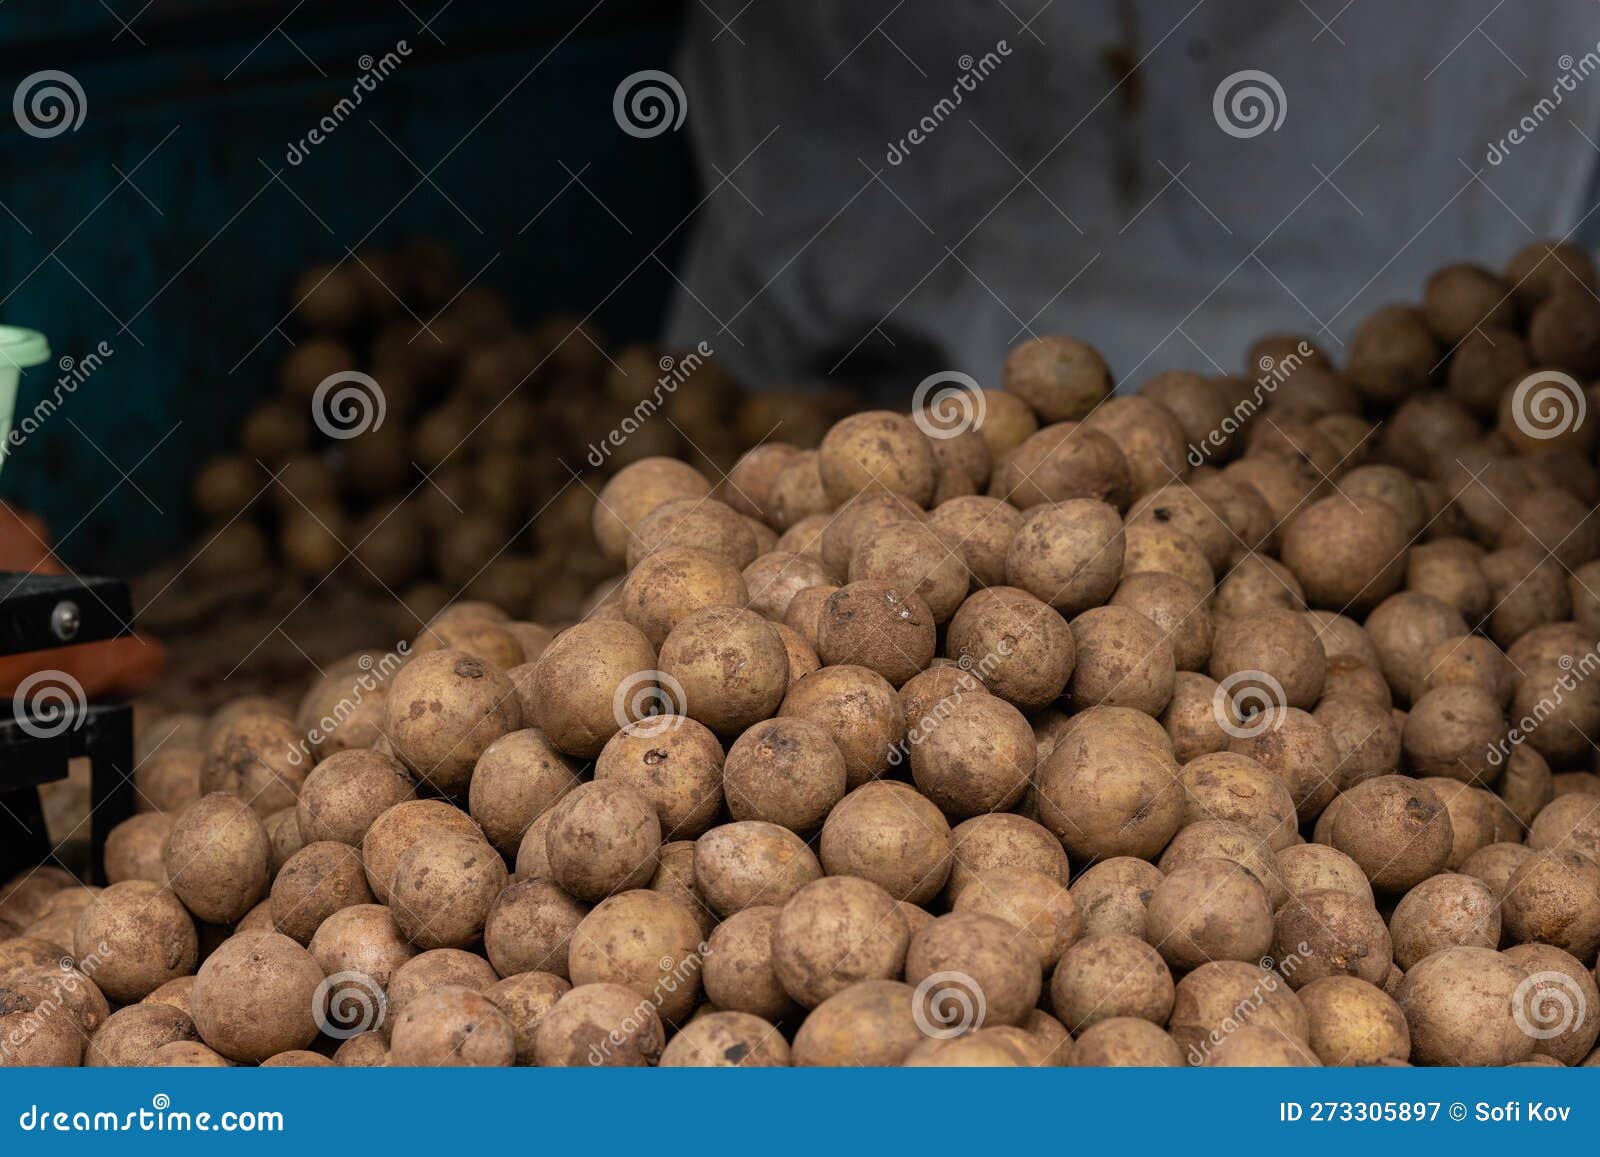 805 Whole Potatoe Stock Photos - Free & Royalty-Free Stock Photos from  Dreamstime